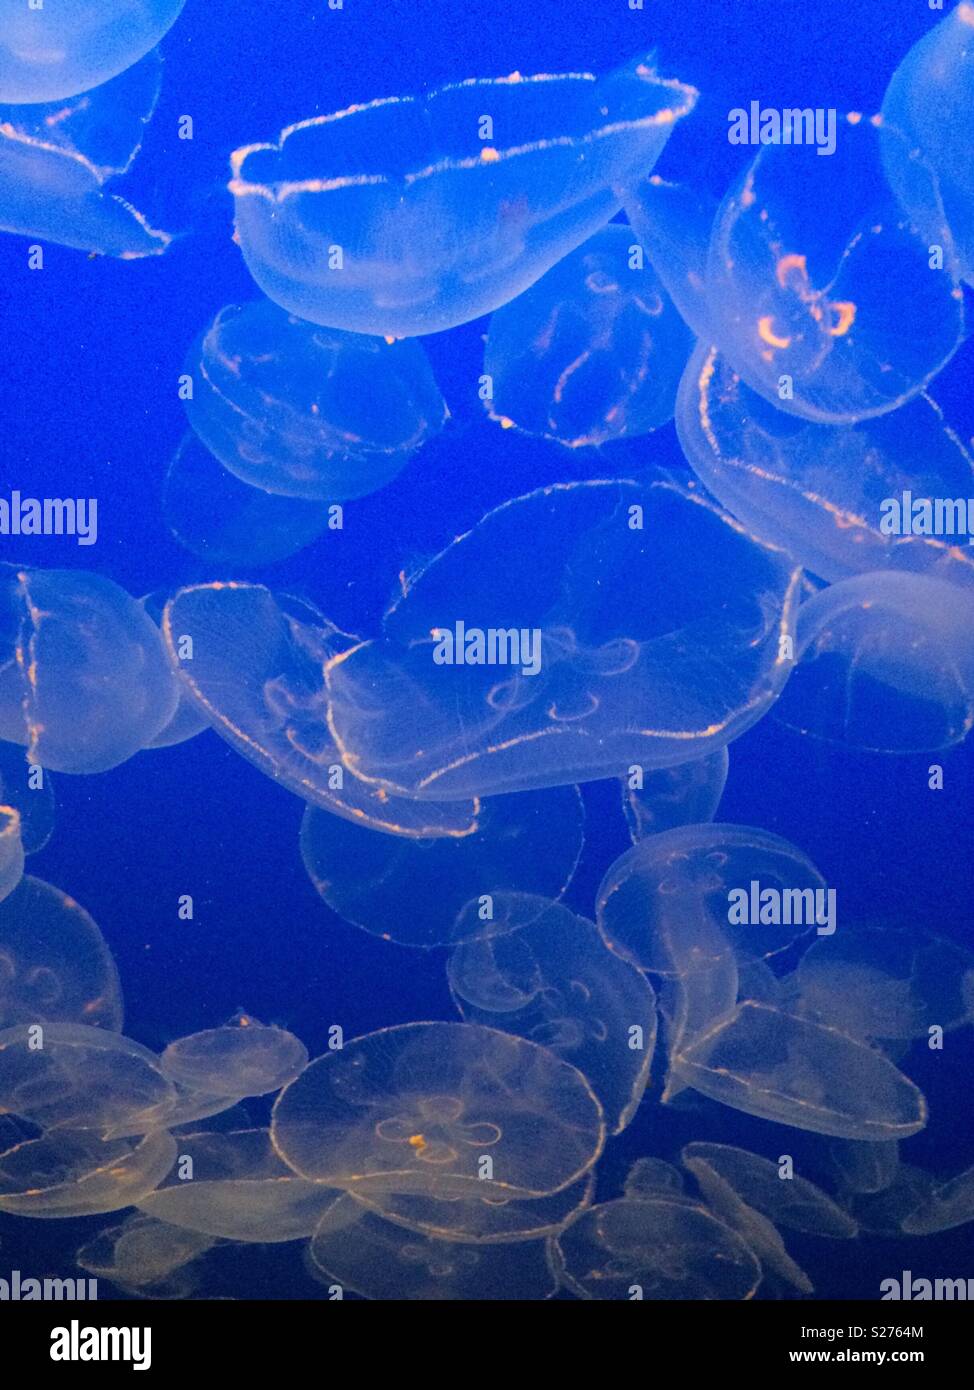 Jelly fish at the aquarium Stock Photo